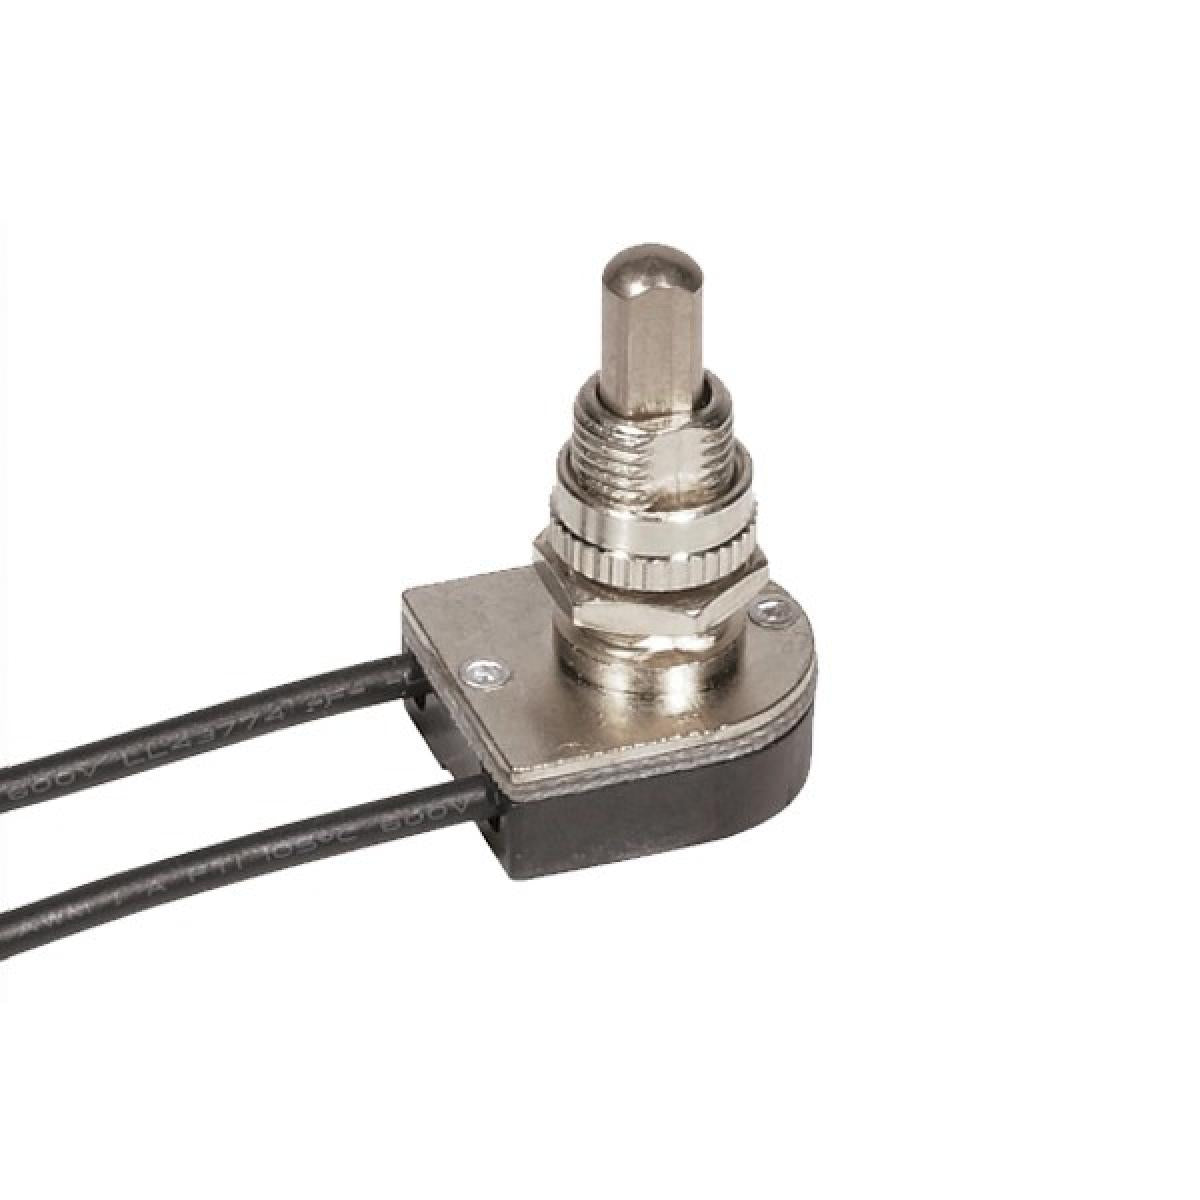 Satco 80-1127 On-Off Metal Push Switch 5/8" Metal Bushing Single Circuit 6A-125V, 3A-250V Rating Nickel Finish